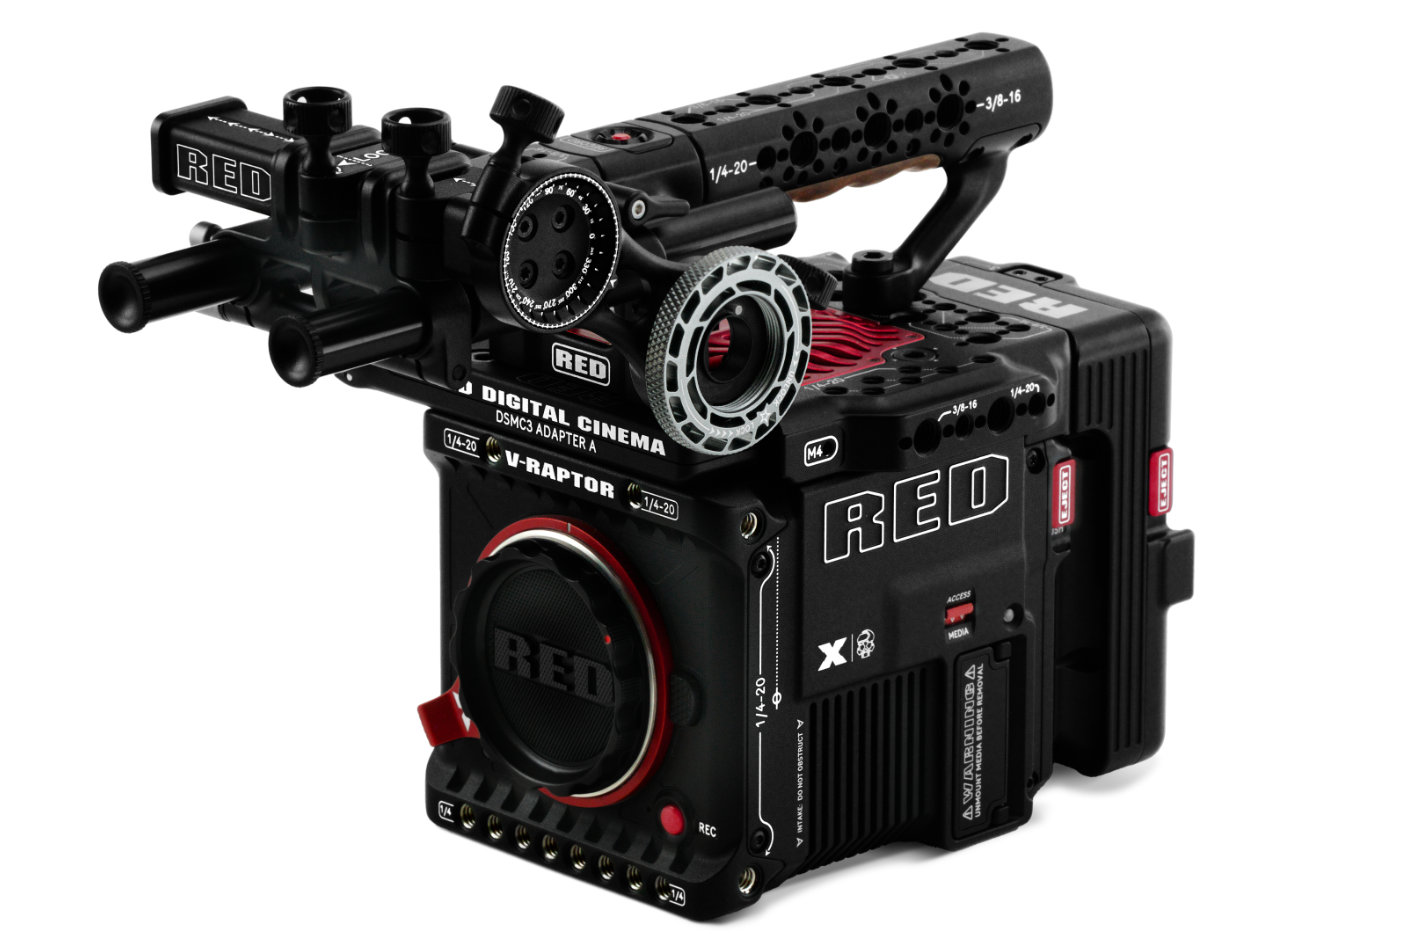 New RED DIGITAL CINEMA cameras with global shutter sensor